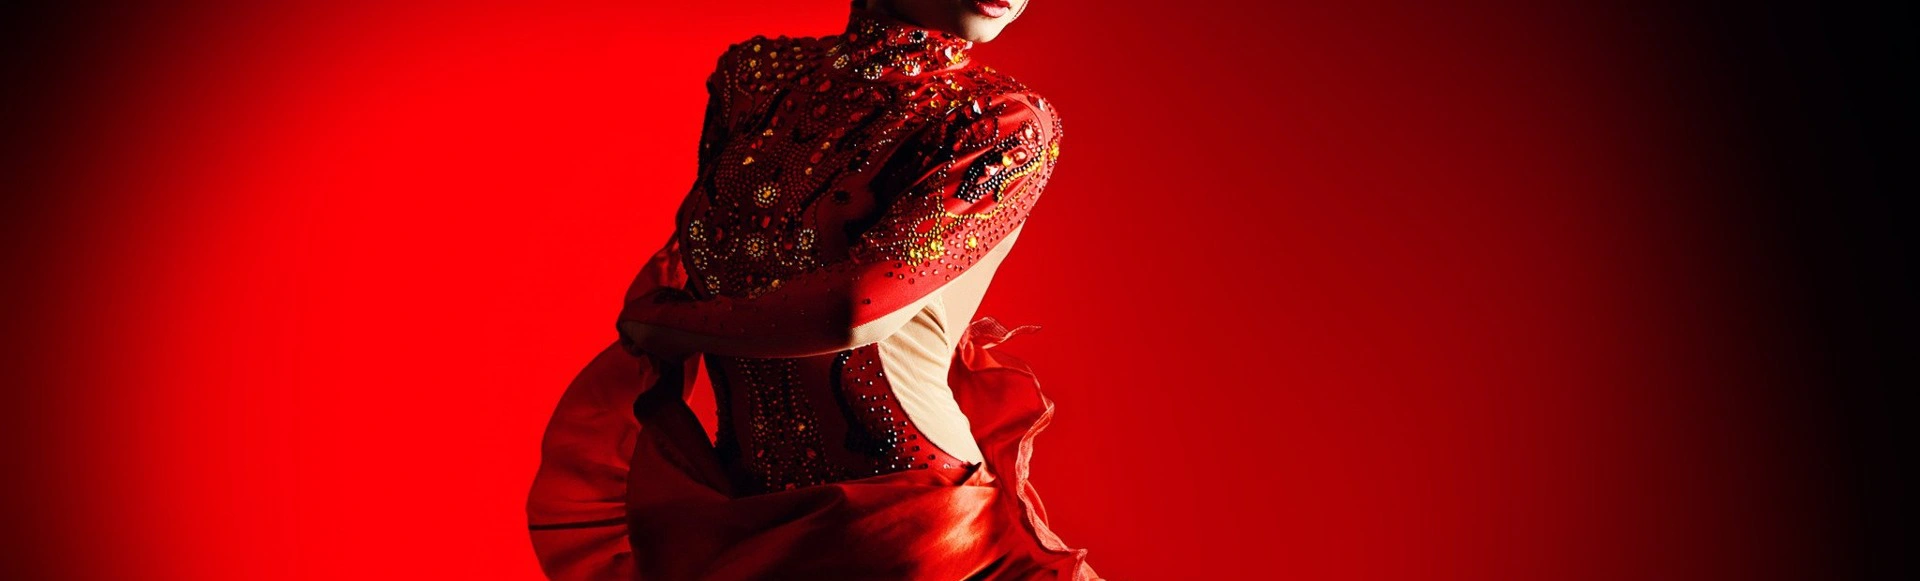 Фламенко - Танец Страсти и Огня